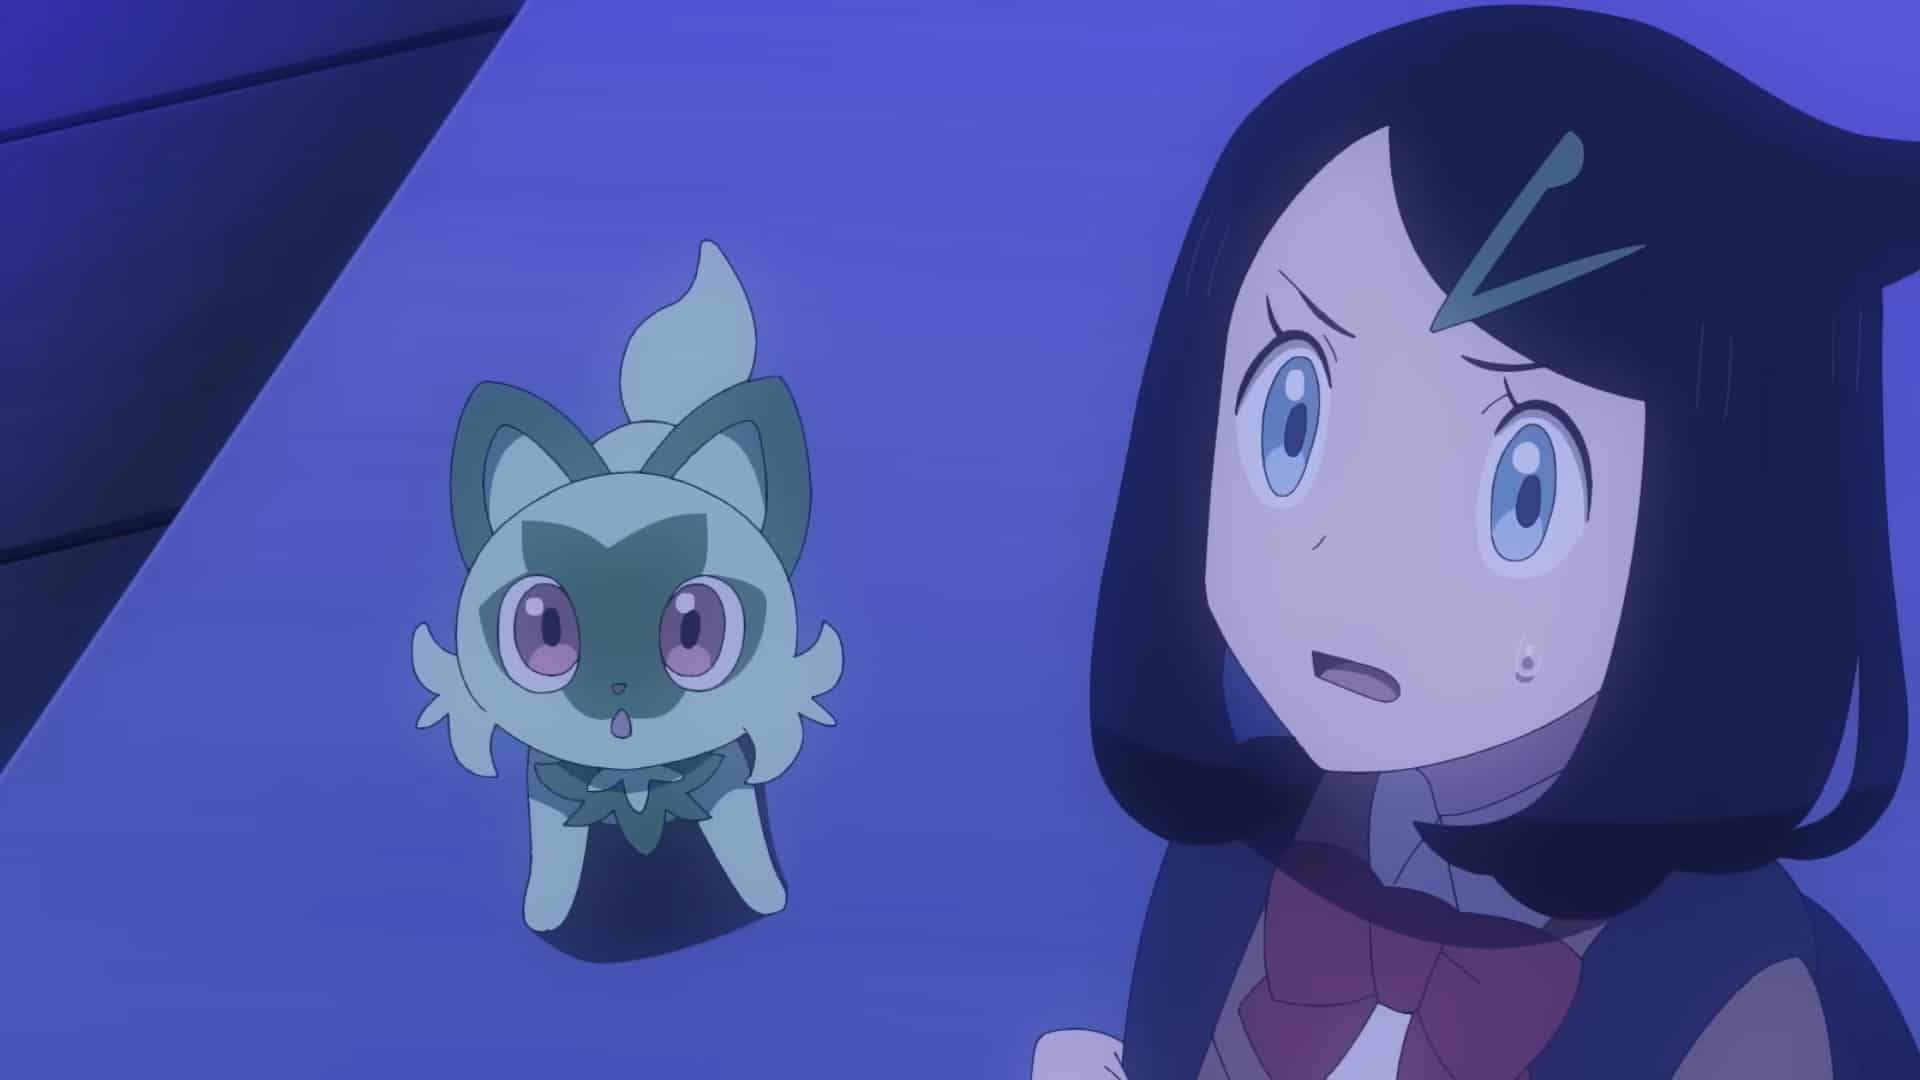 Lico And Her Pokémon Sprigatito Fleeing From The Explorers - Pokémon Horizons The Series Trailer